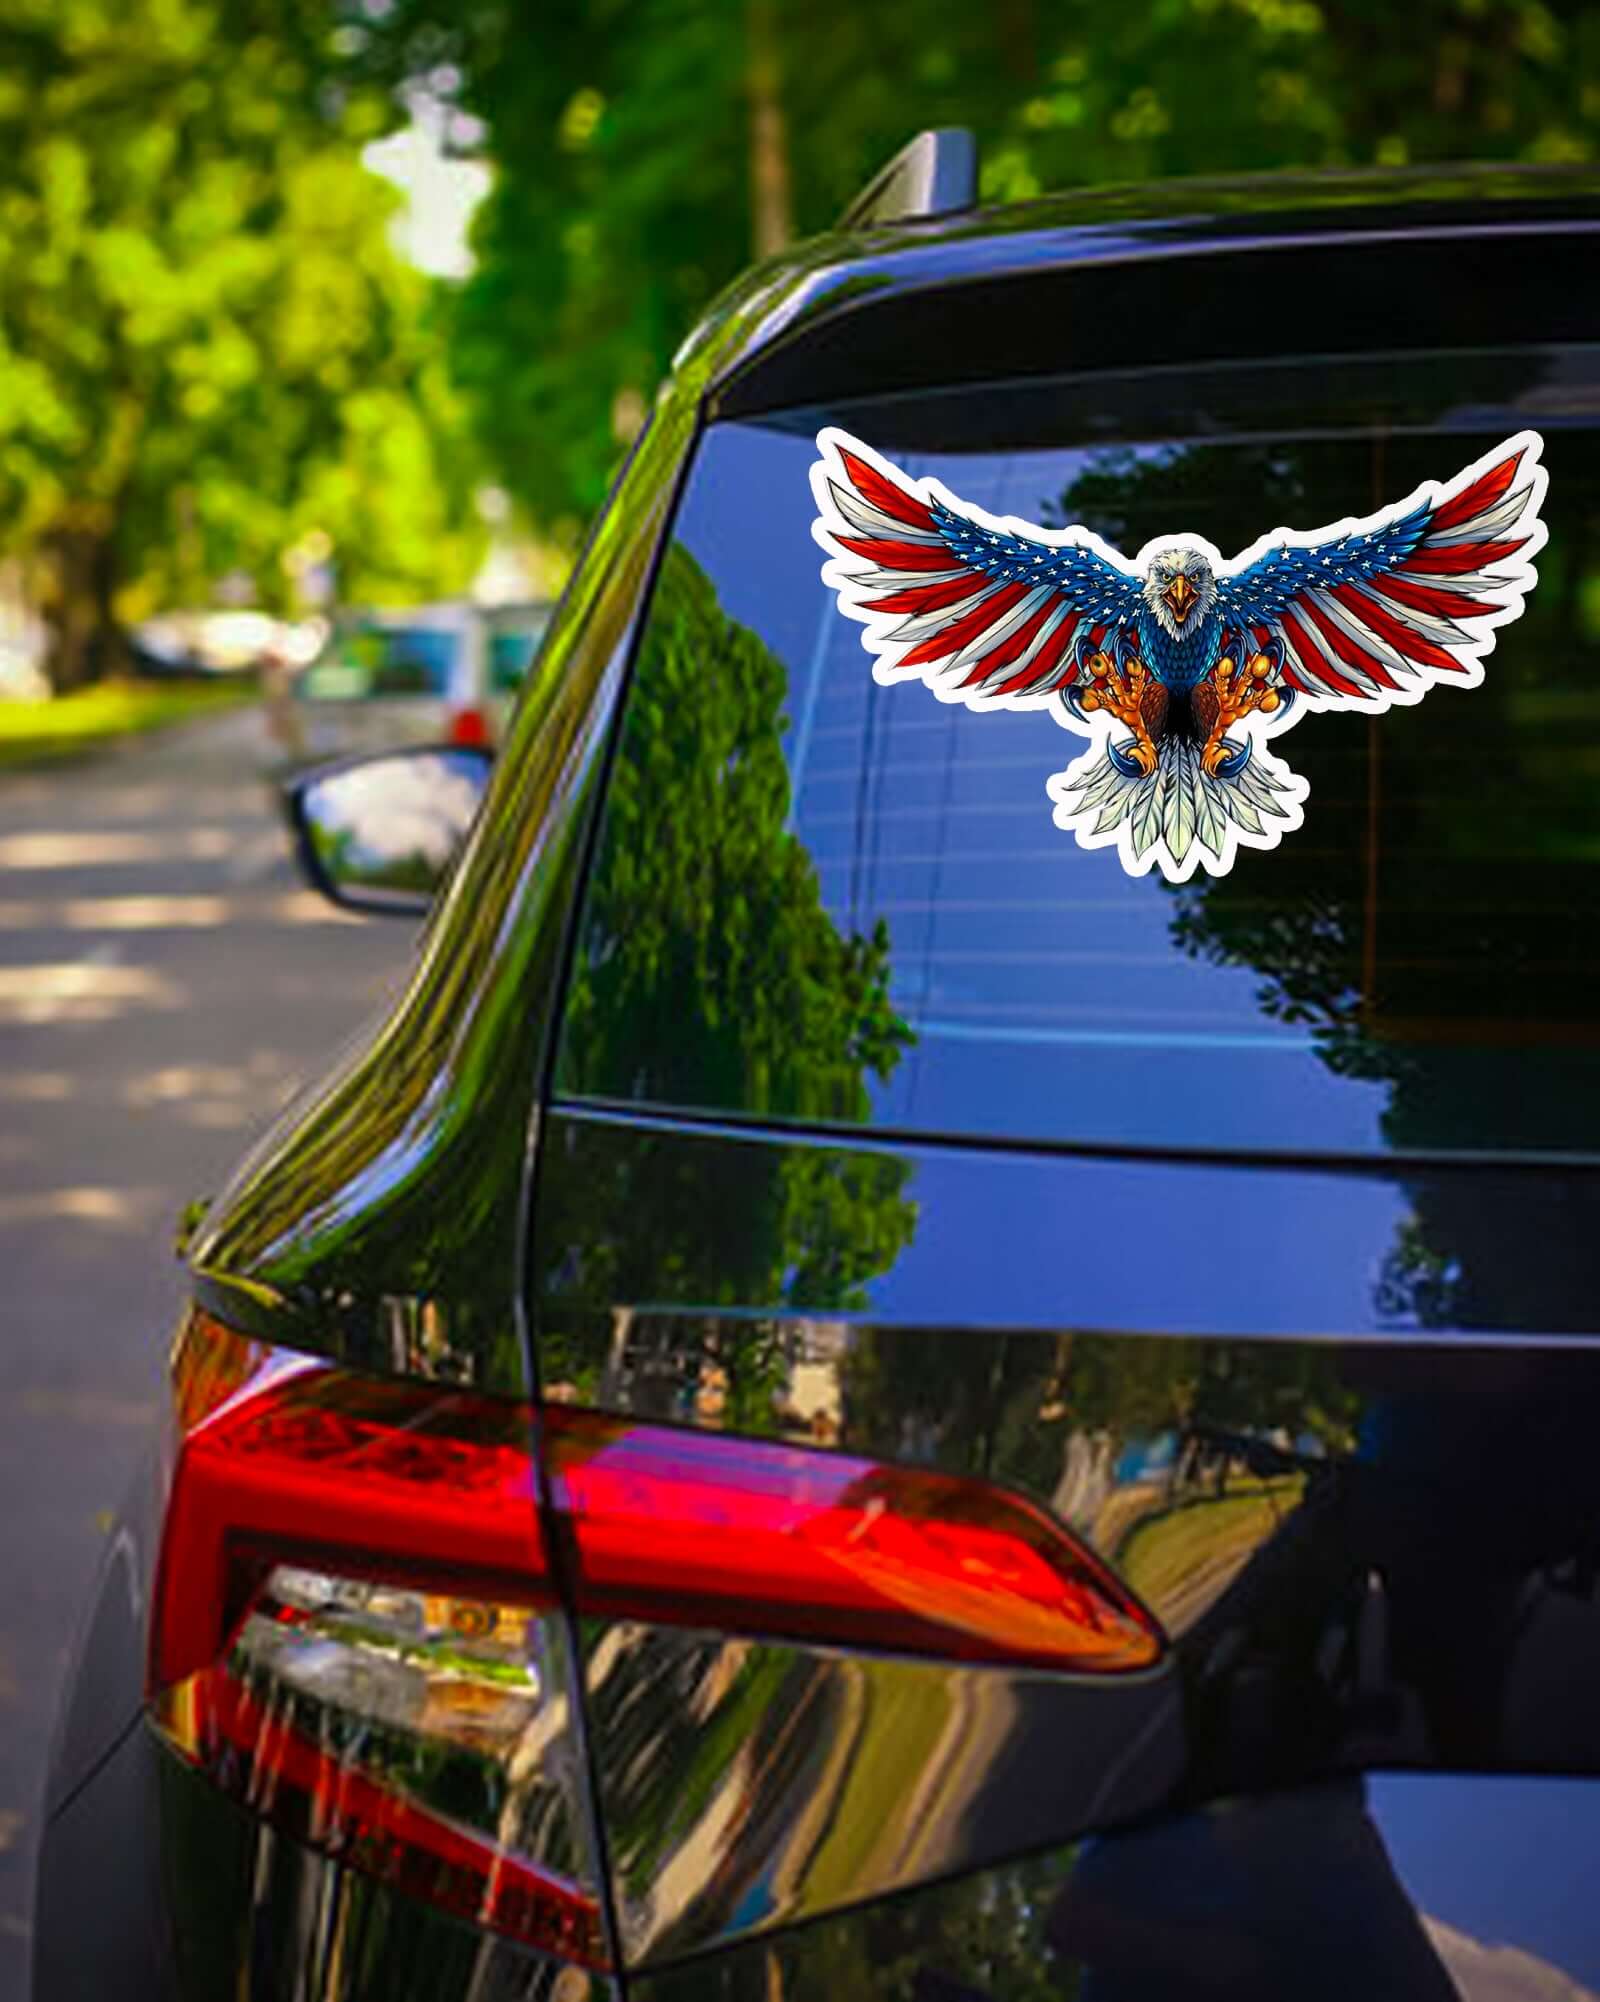 Eagle Flag USA Patriotic Graphic Sticker - ApparelinClick